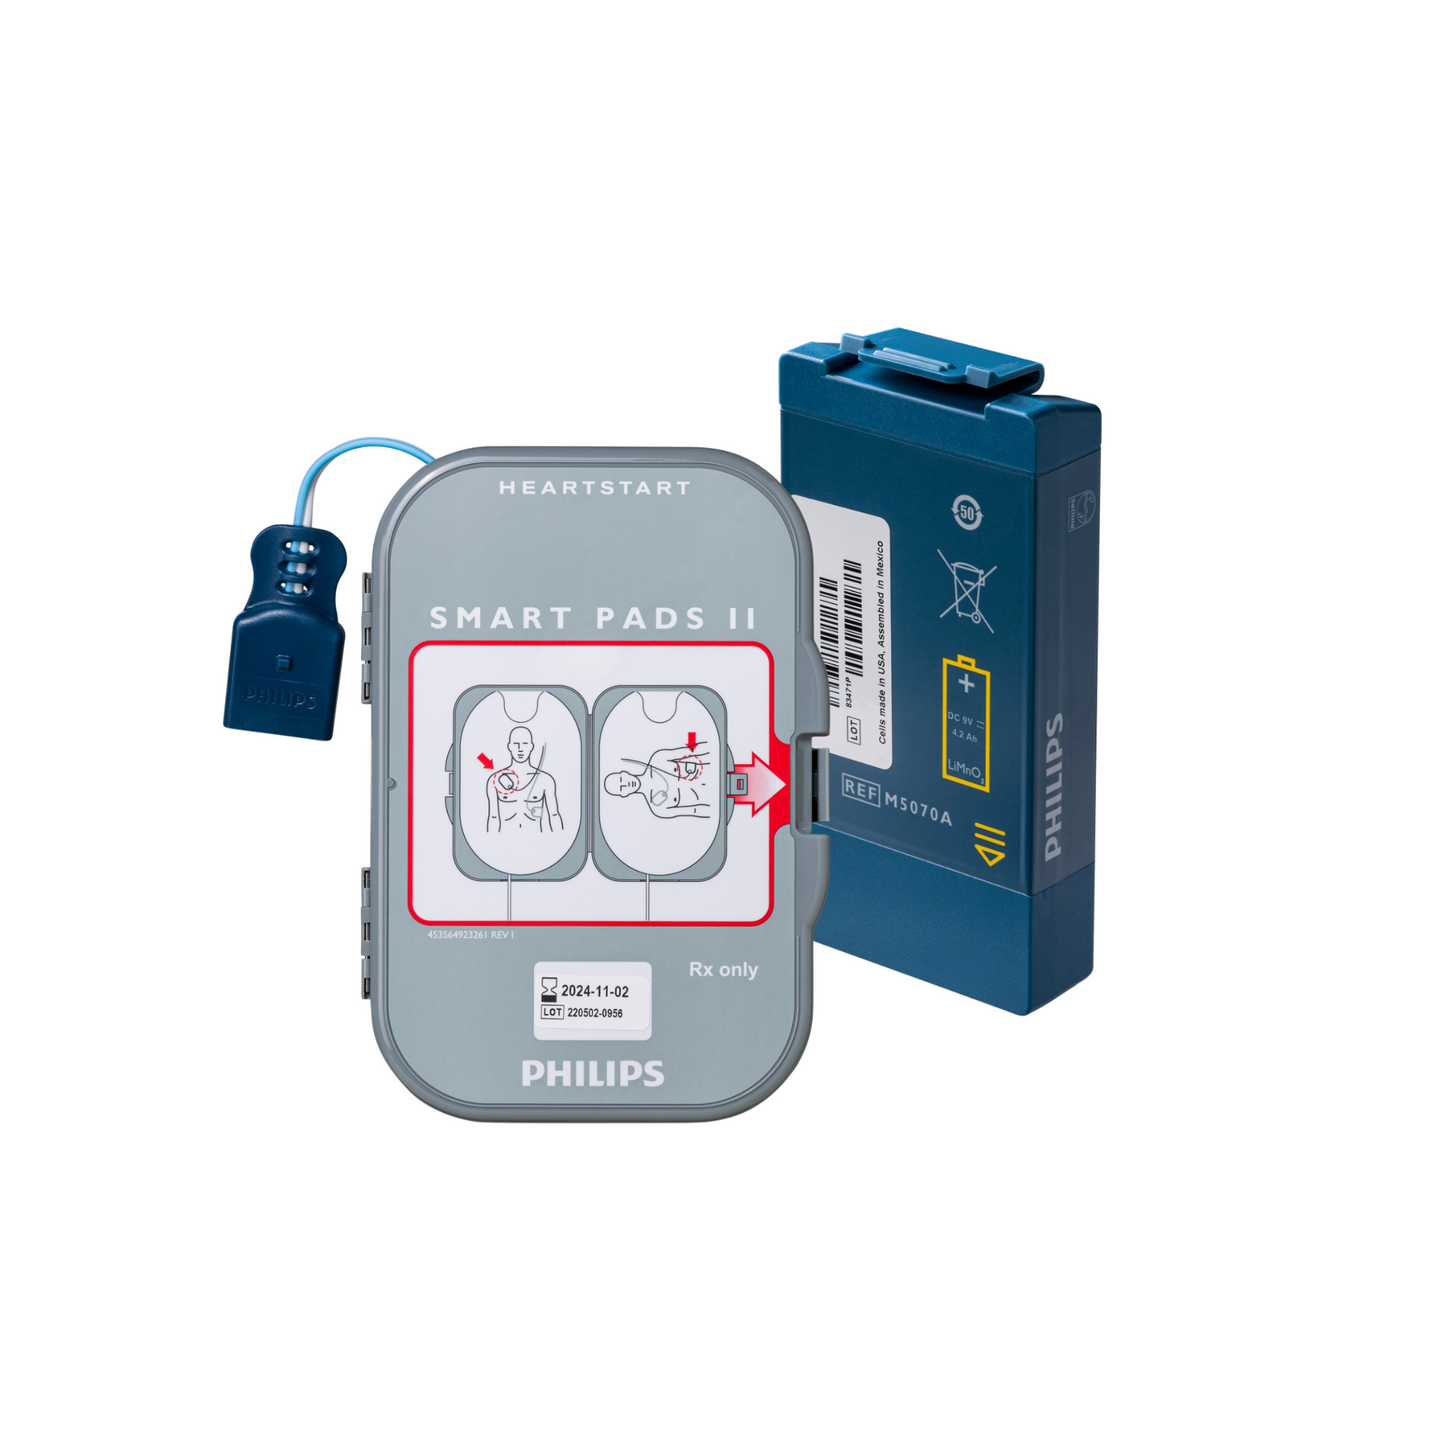 Pack complet Philips Heartstart - FRx DAE avec housse de protection